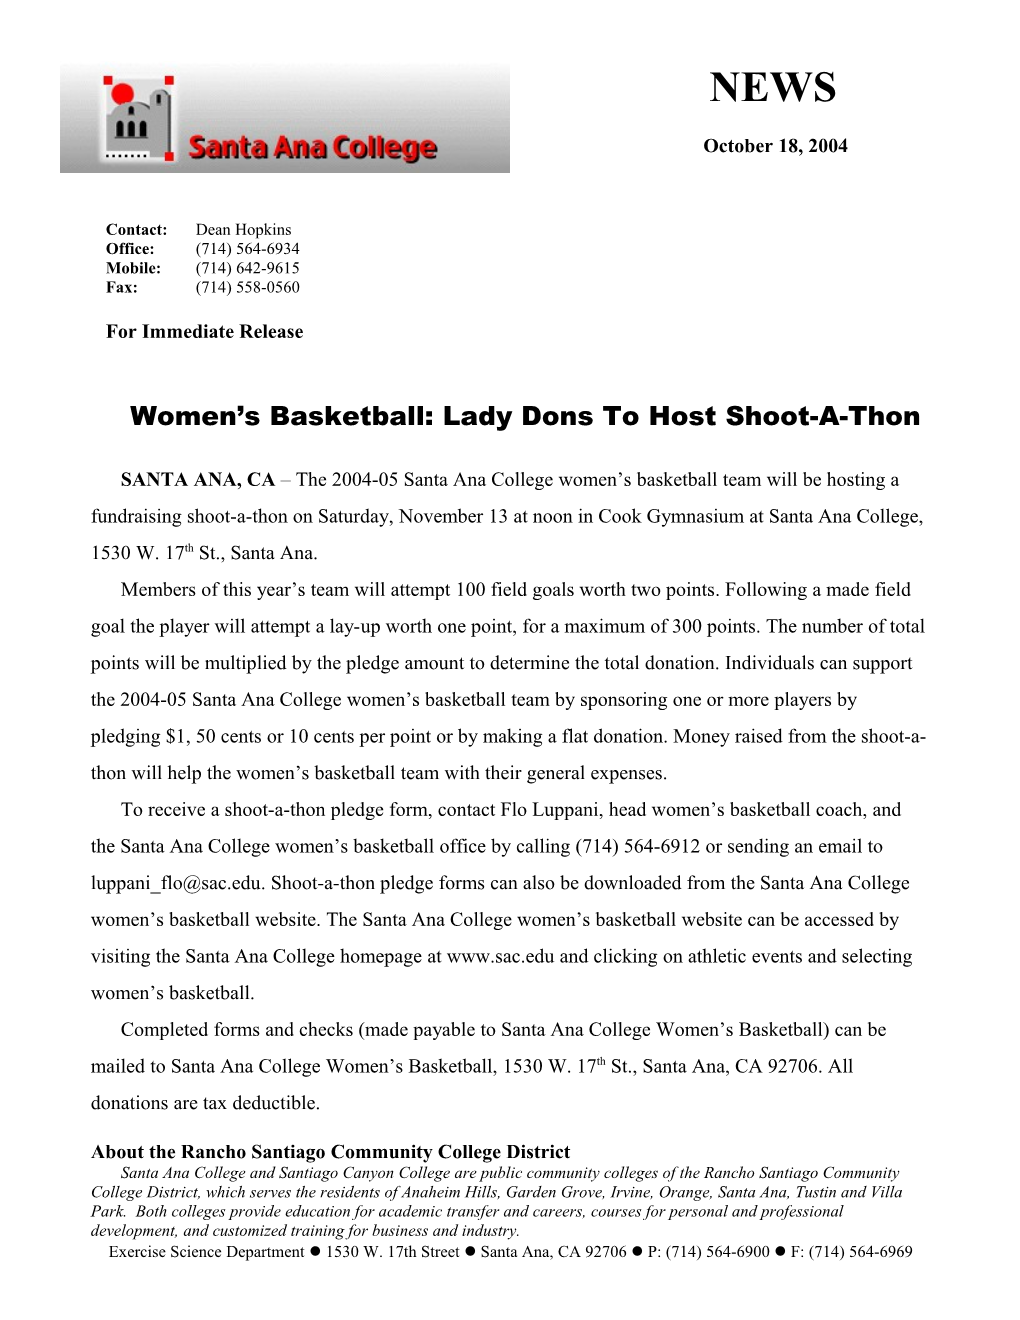 2004 SAC Women's Basketball Shoot-A-Thon